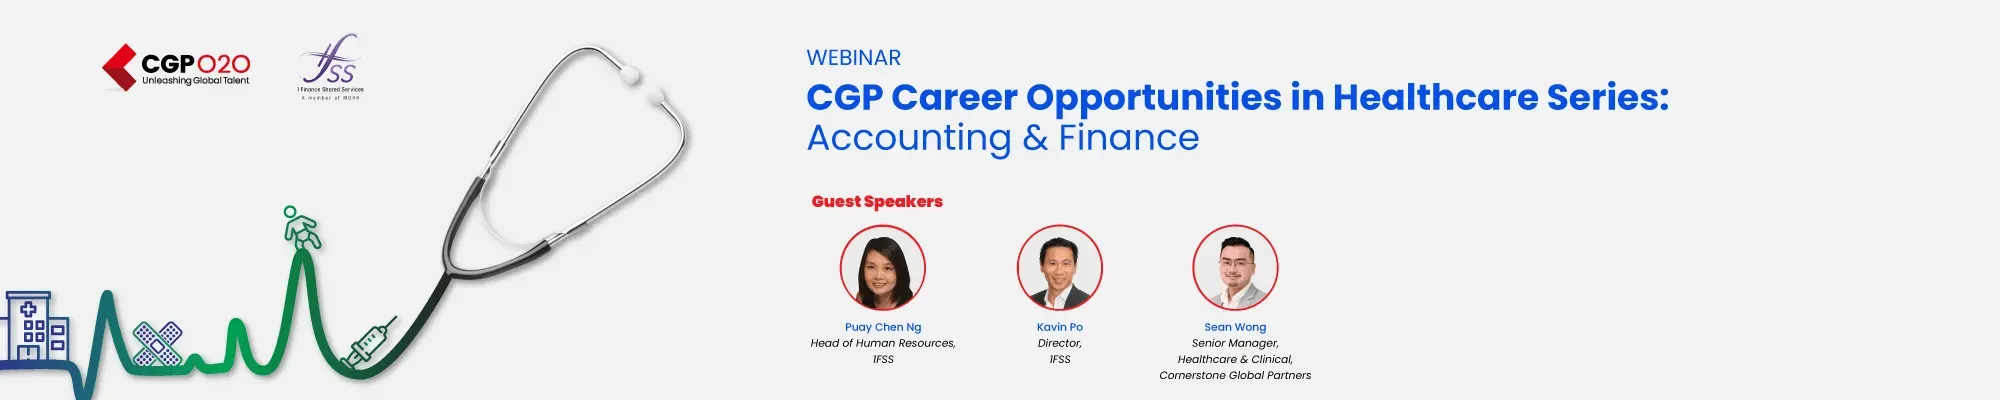 CGP Career Opportunities in Healthcare Series: Accounting & Finance - Webinar